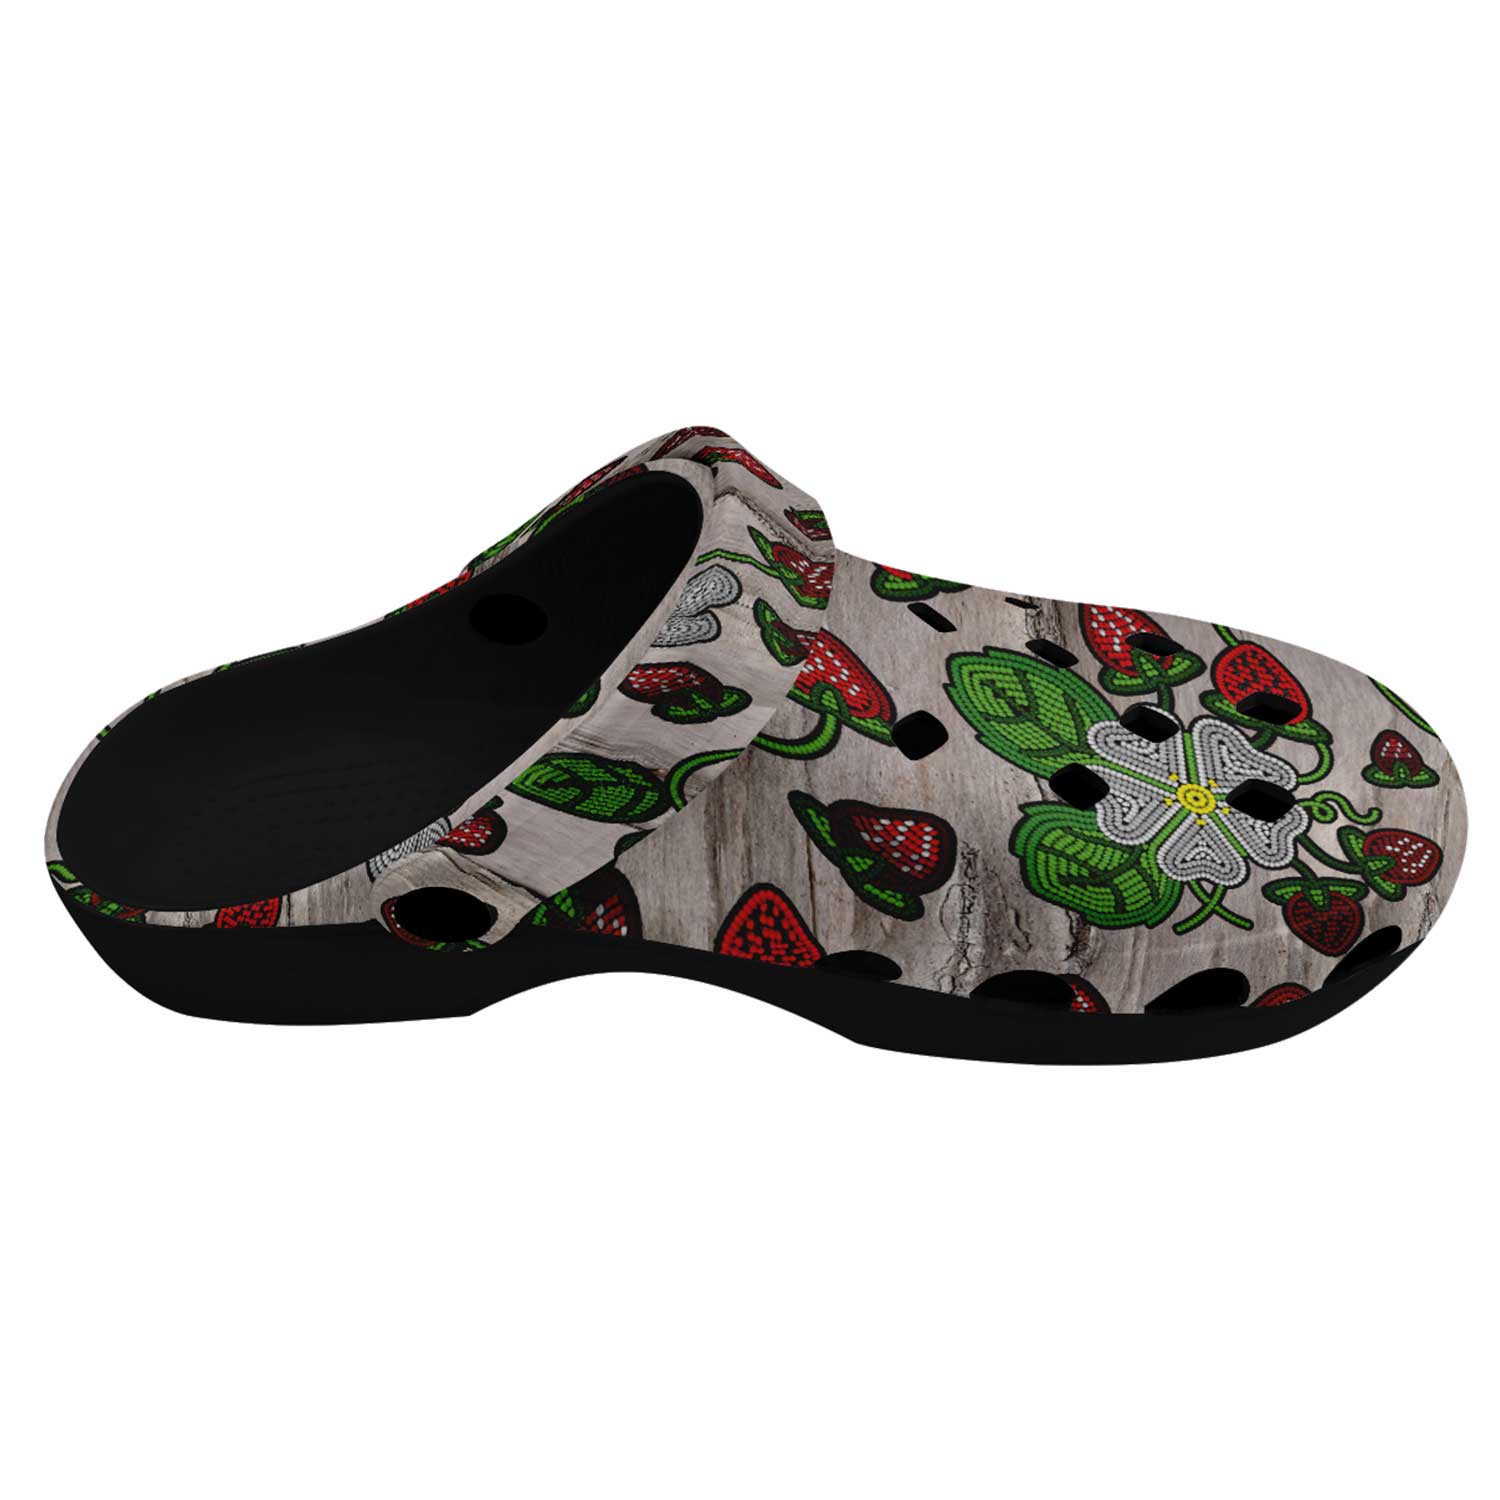 Strawberry Dreams Bright Birch Muddies Unisex Clog Shoes